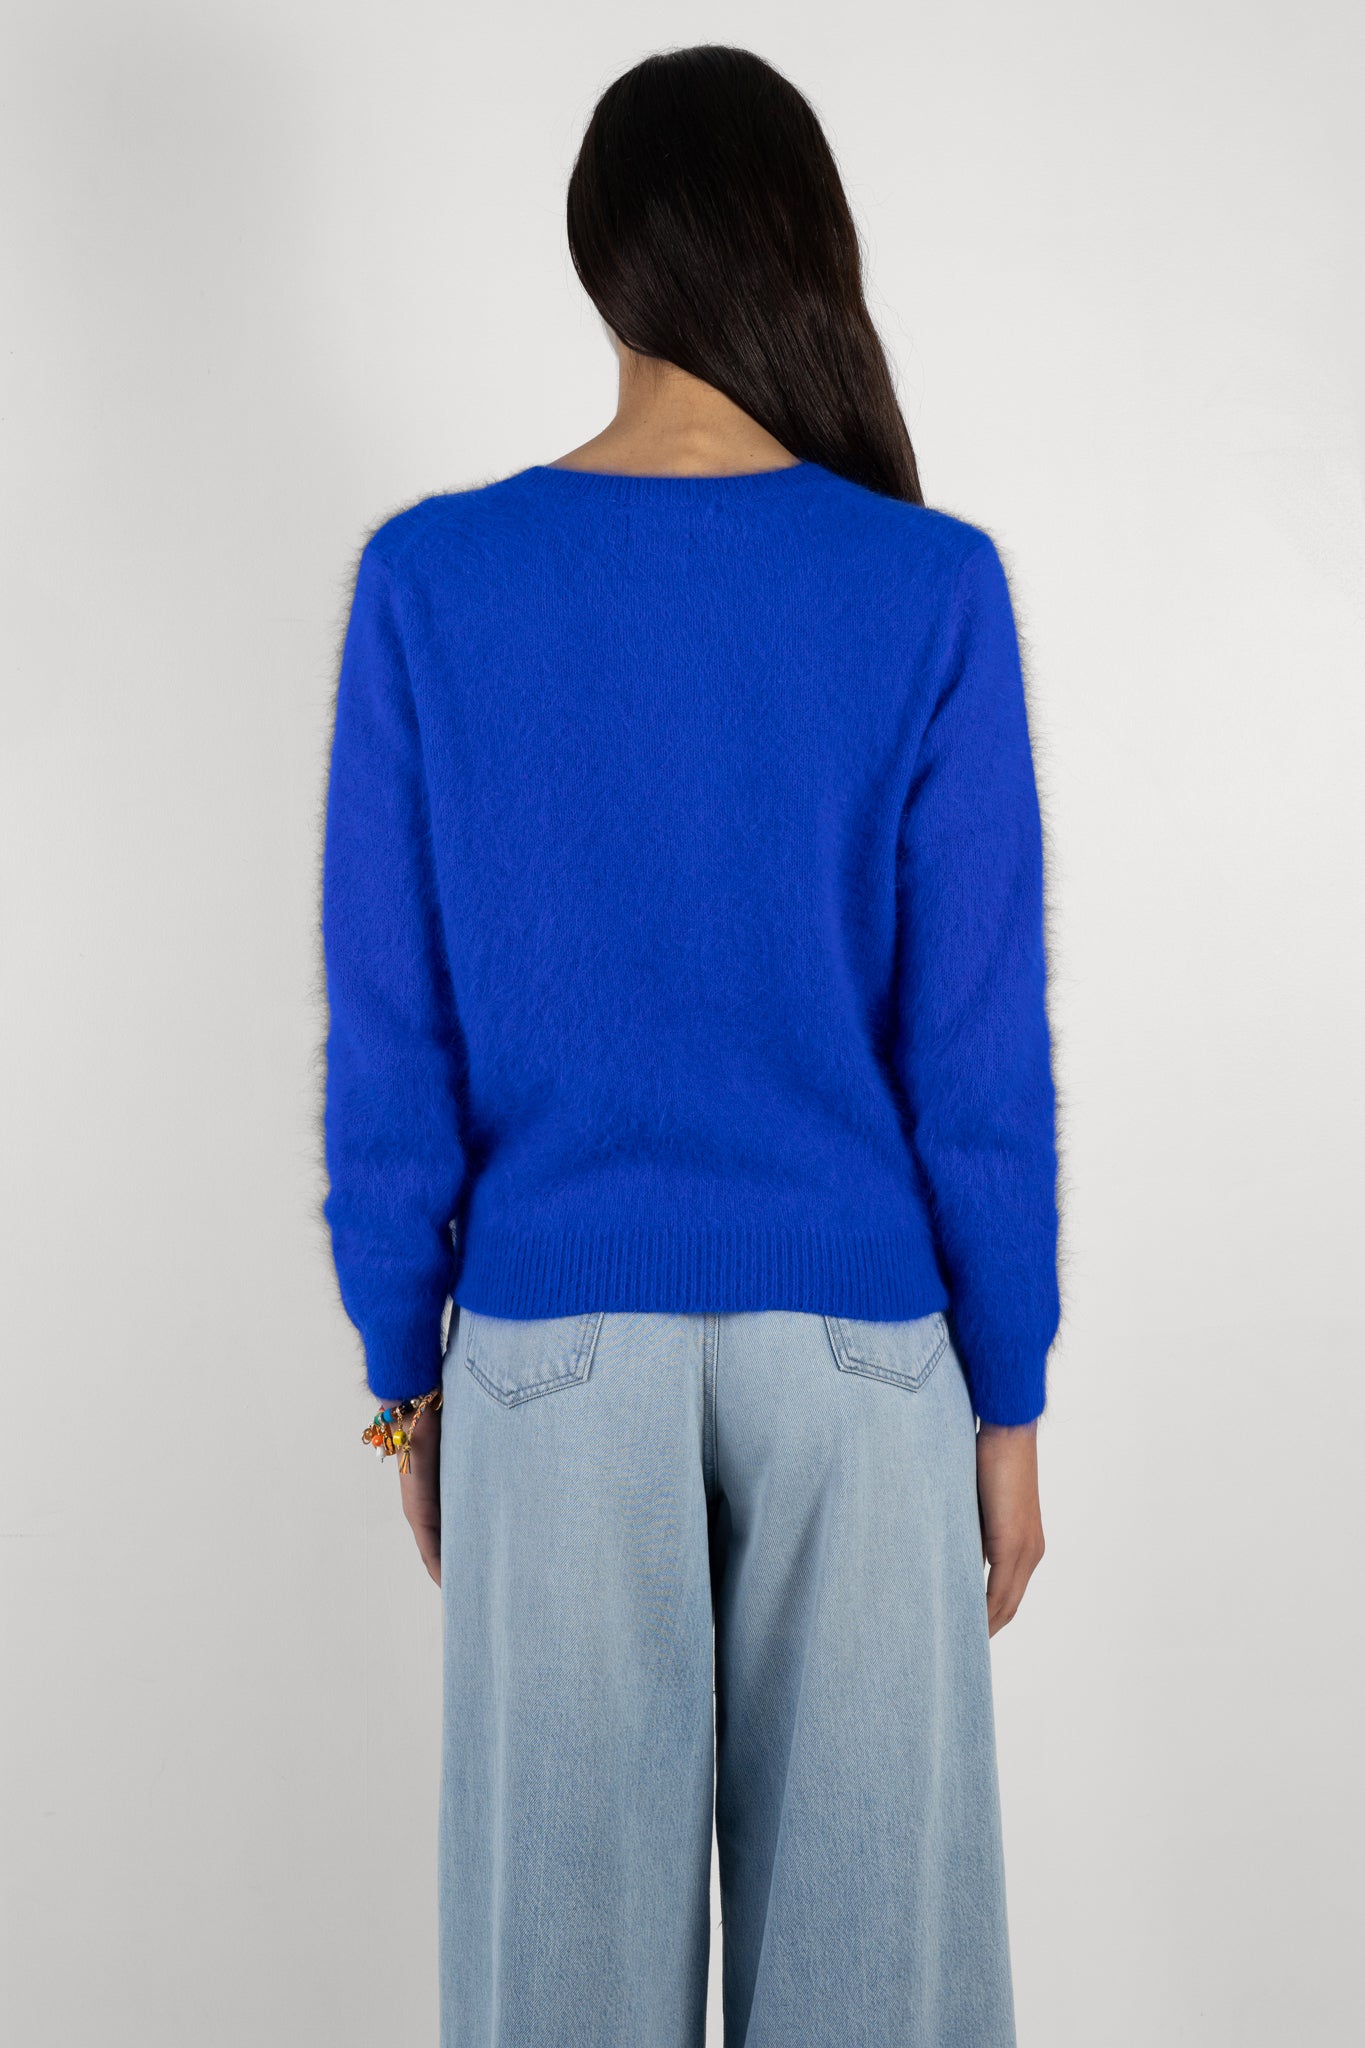 Womens knit | Bellerose Datti jumper | The Standard Store